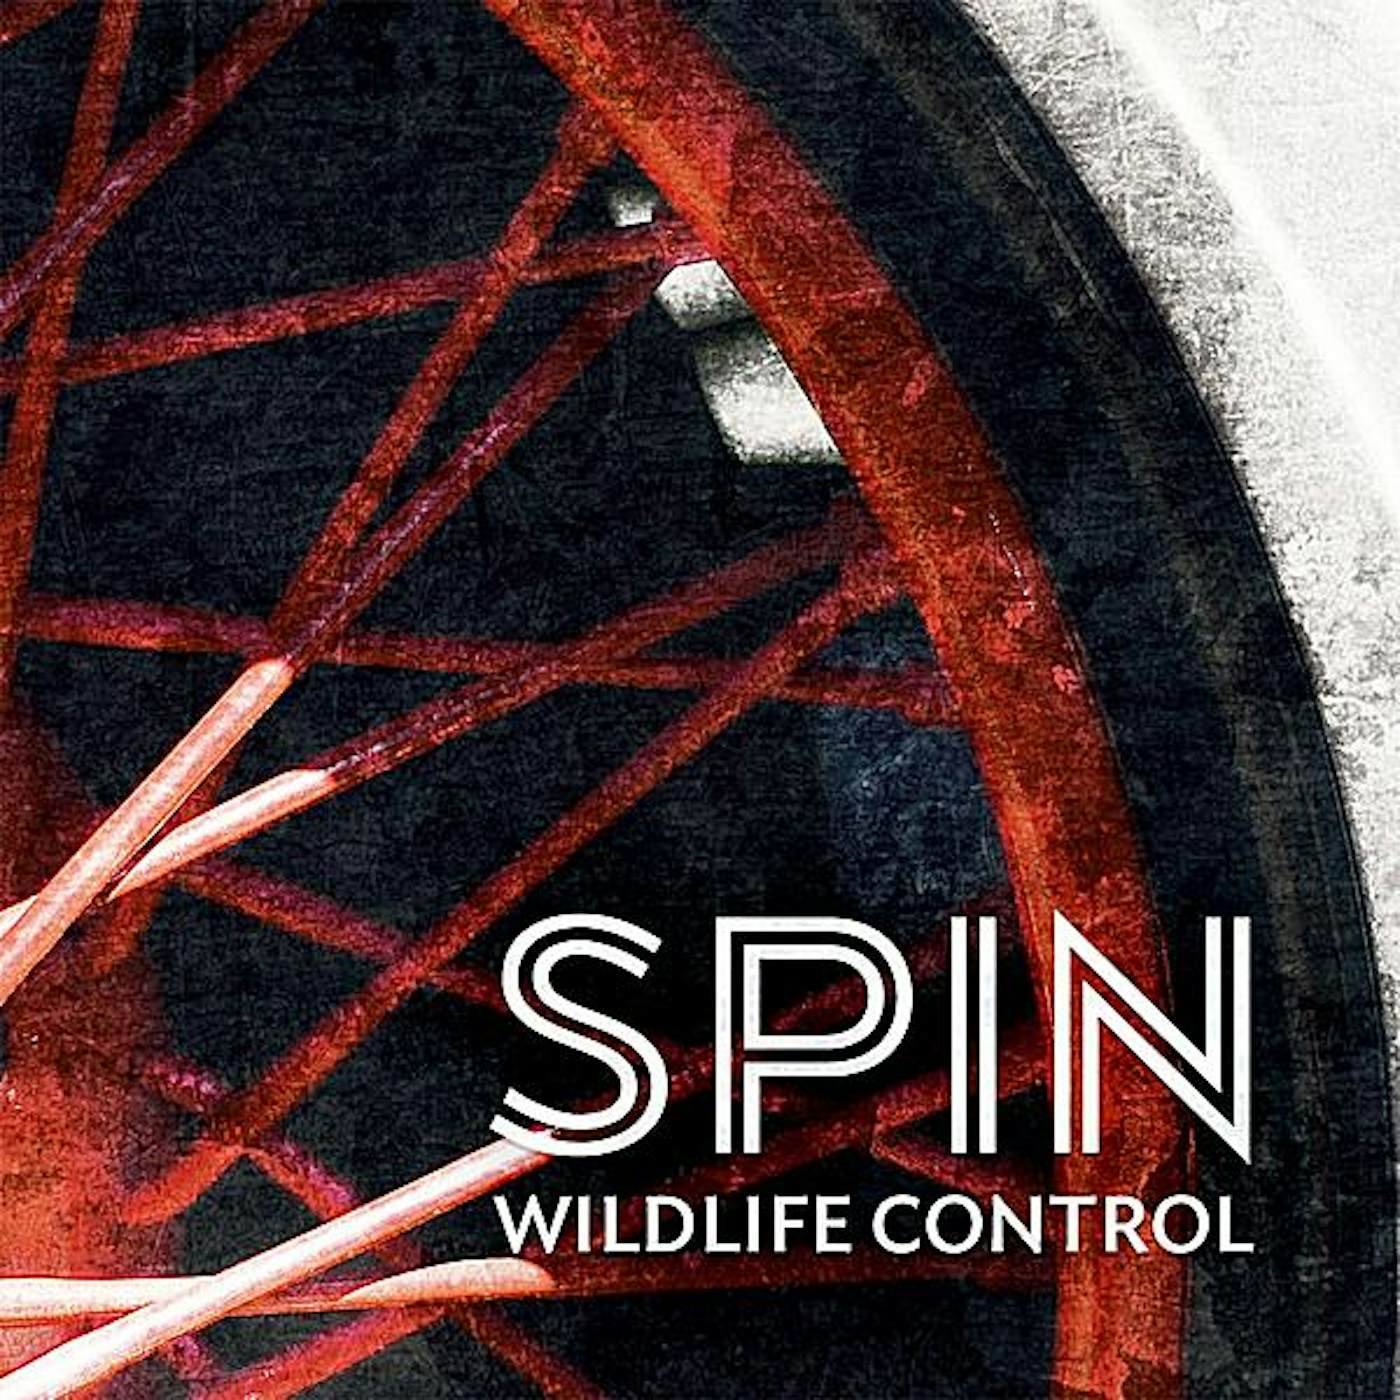 Wildlife Control SPIN CD